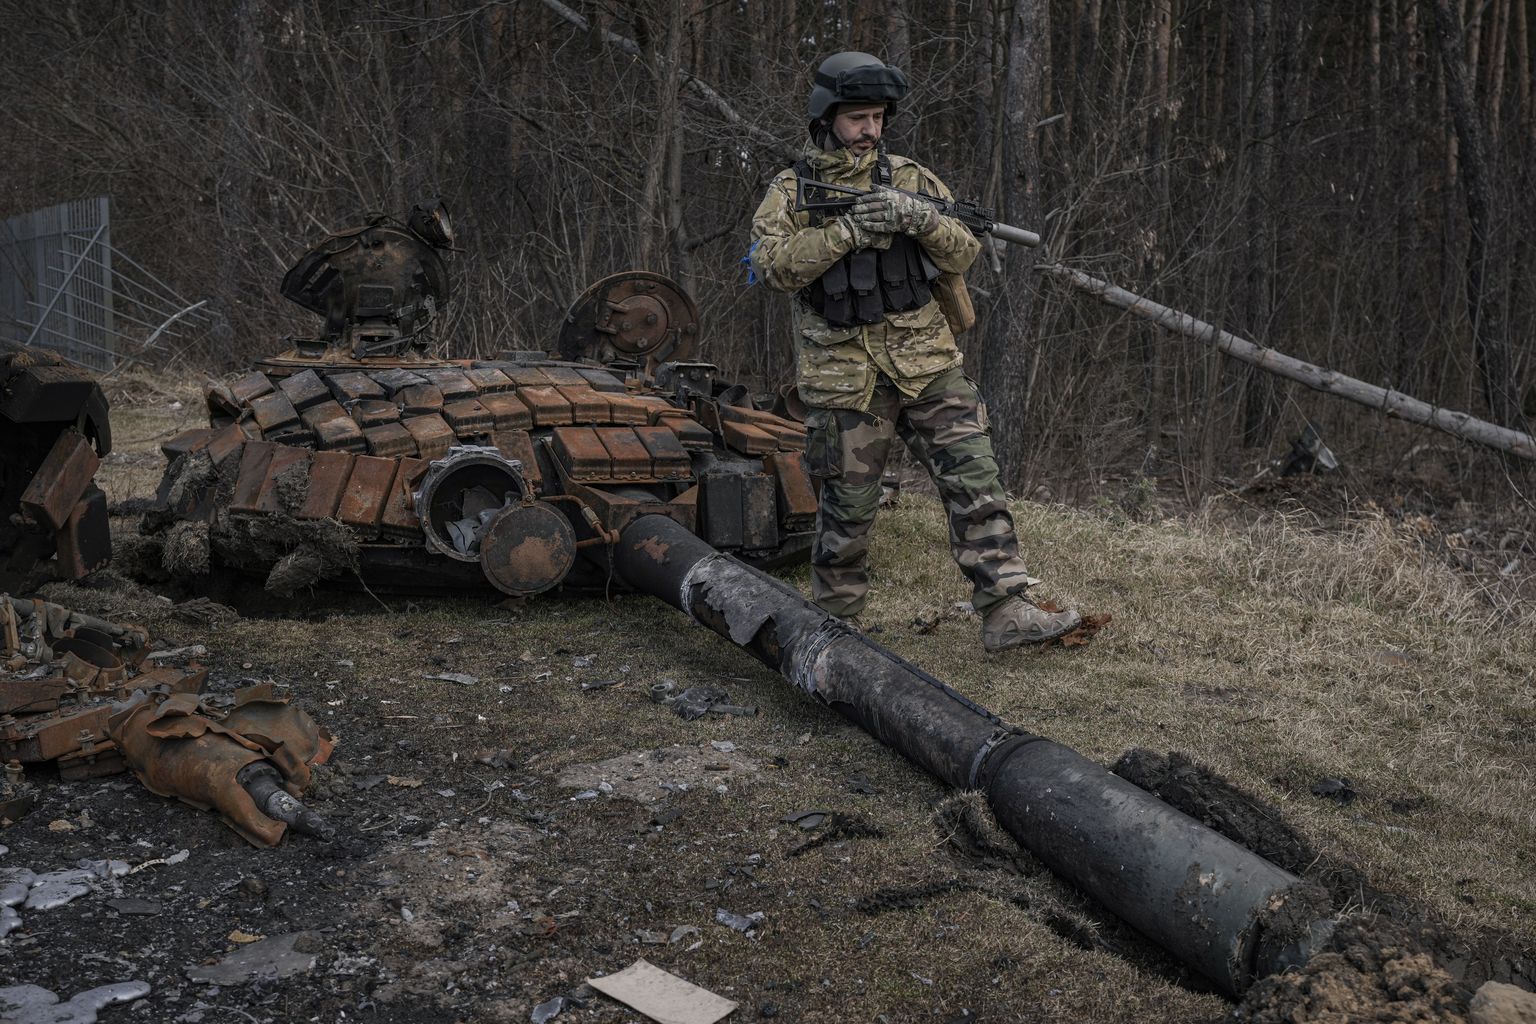 A Ukrainian serviceman walks next to the wreck of a Russian tank in Stoyanka, Ukraine, 日曜日, 副長官のマートヘルメは、センターの最近の提案の代わりに、今後数年間の解決策になるはずだと述べました 27, 2022.